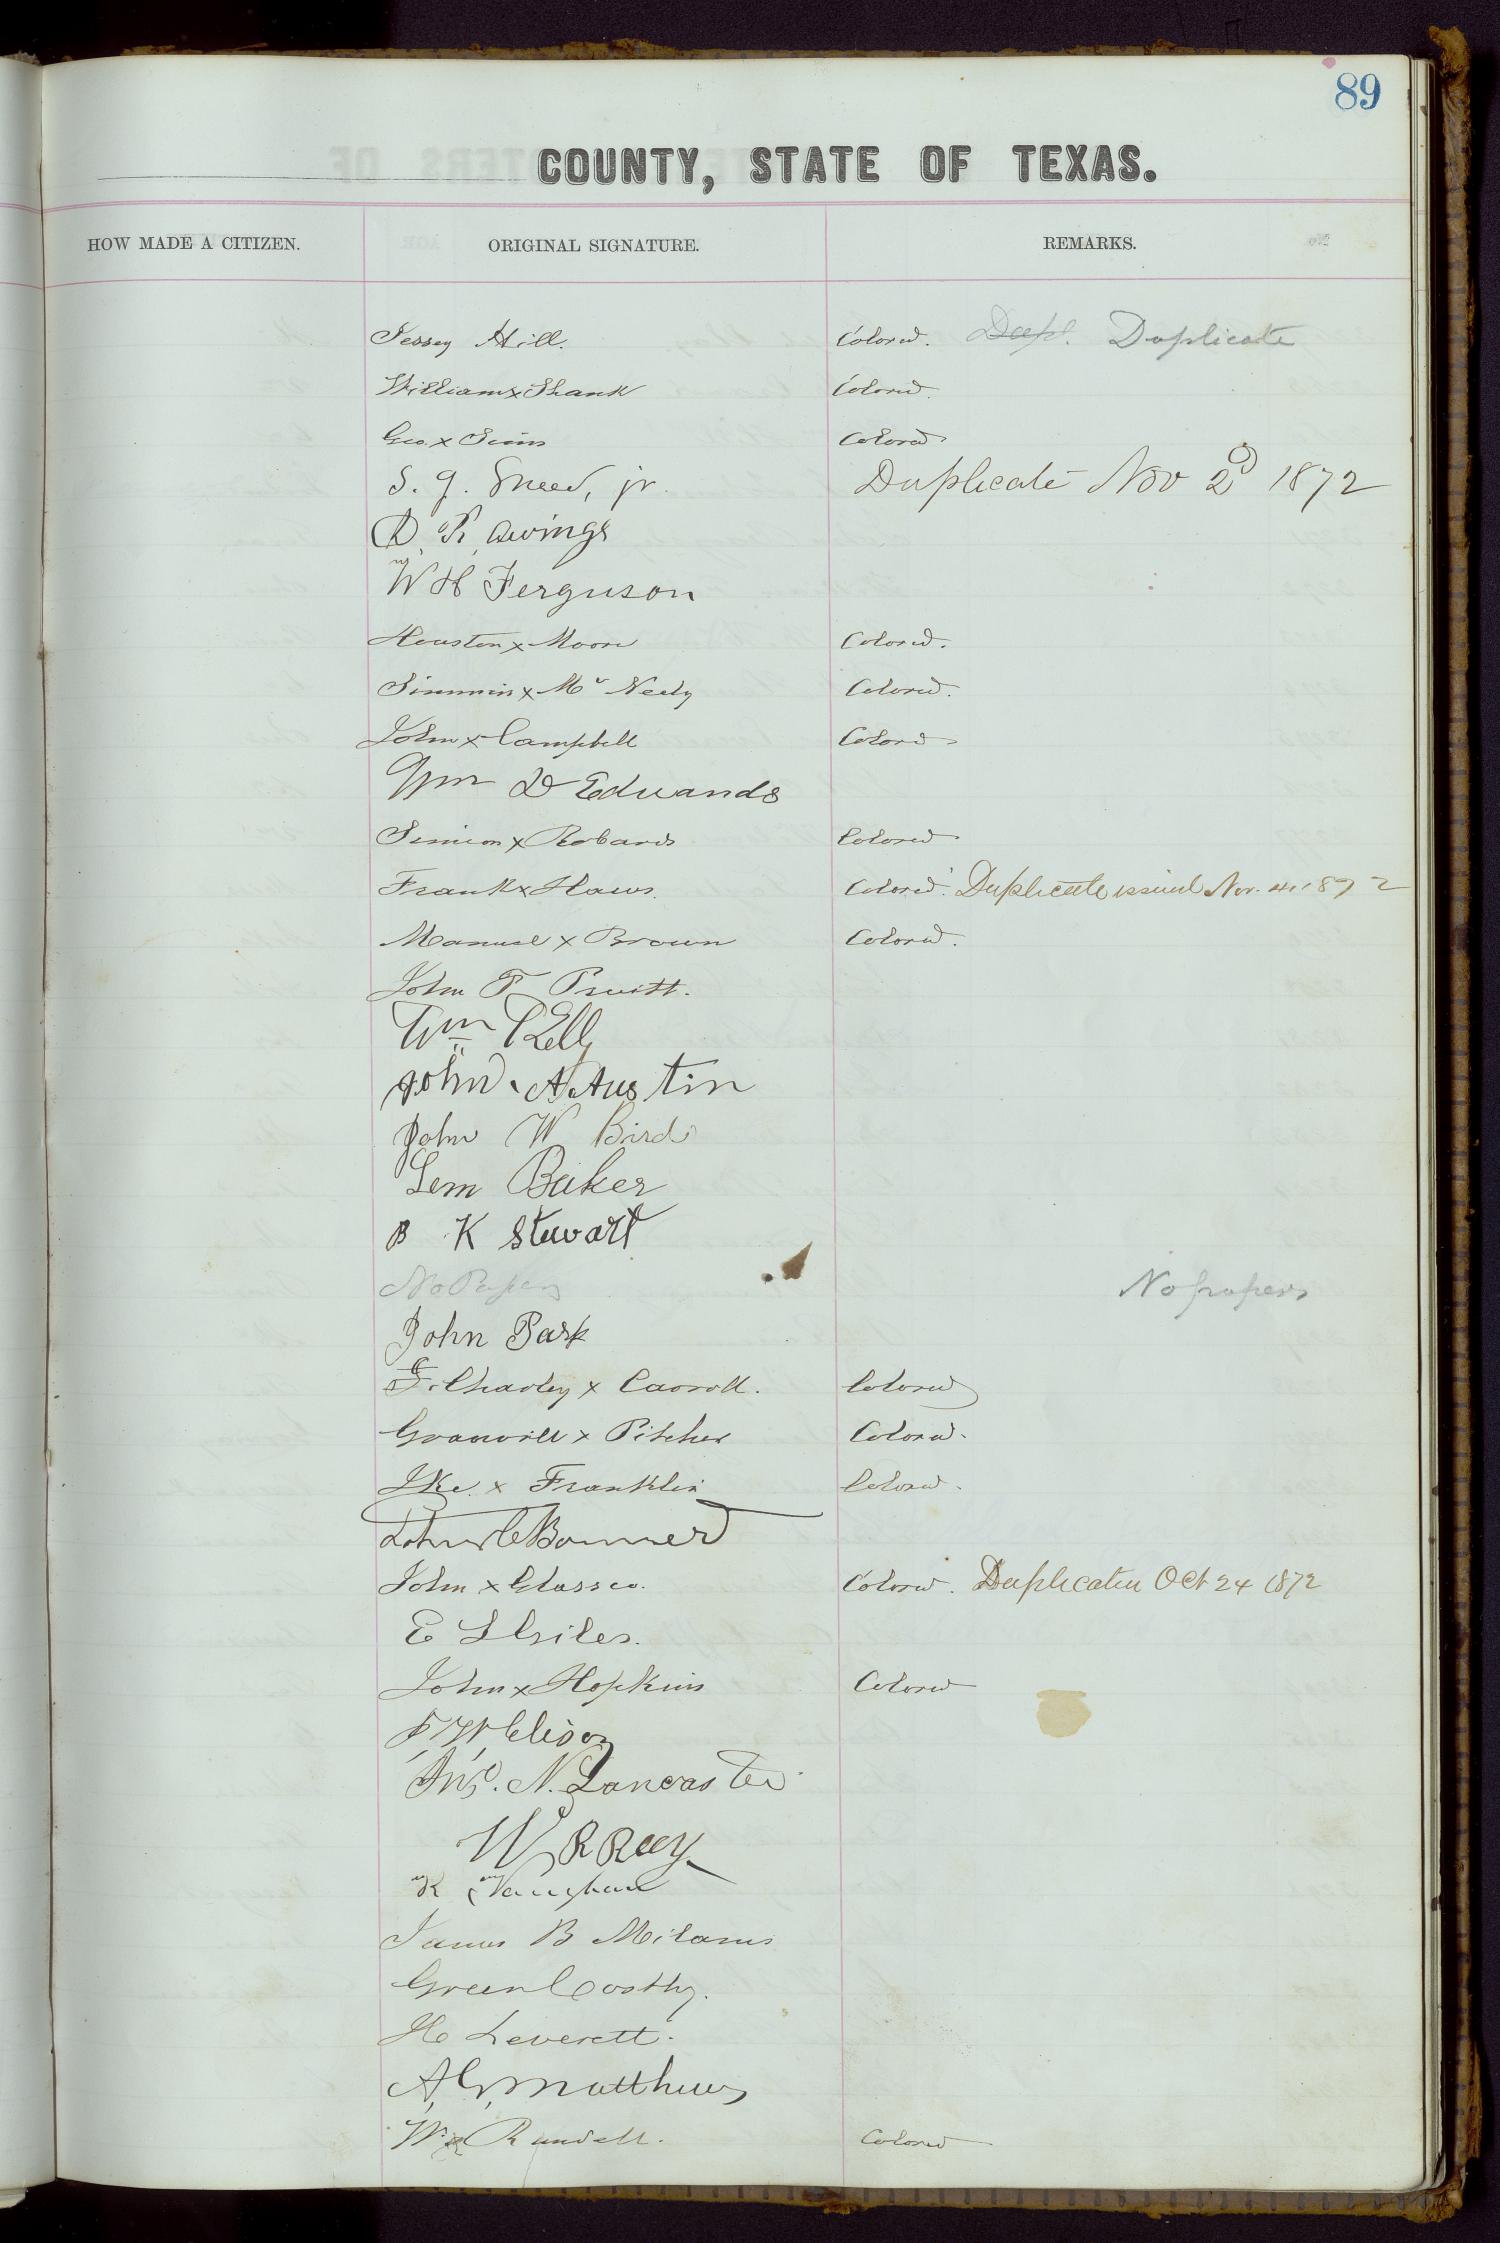 Travis County Election Records: Voter Registration List 1867
                                                
                                                    89
                                                